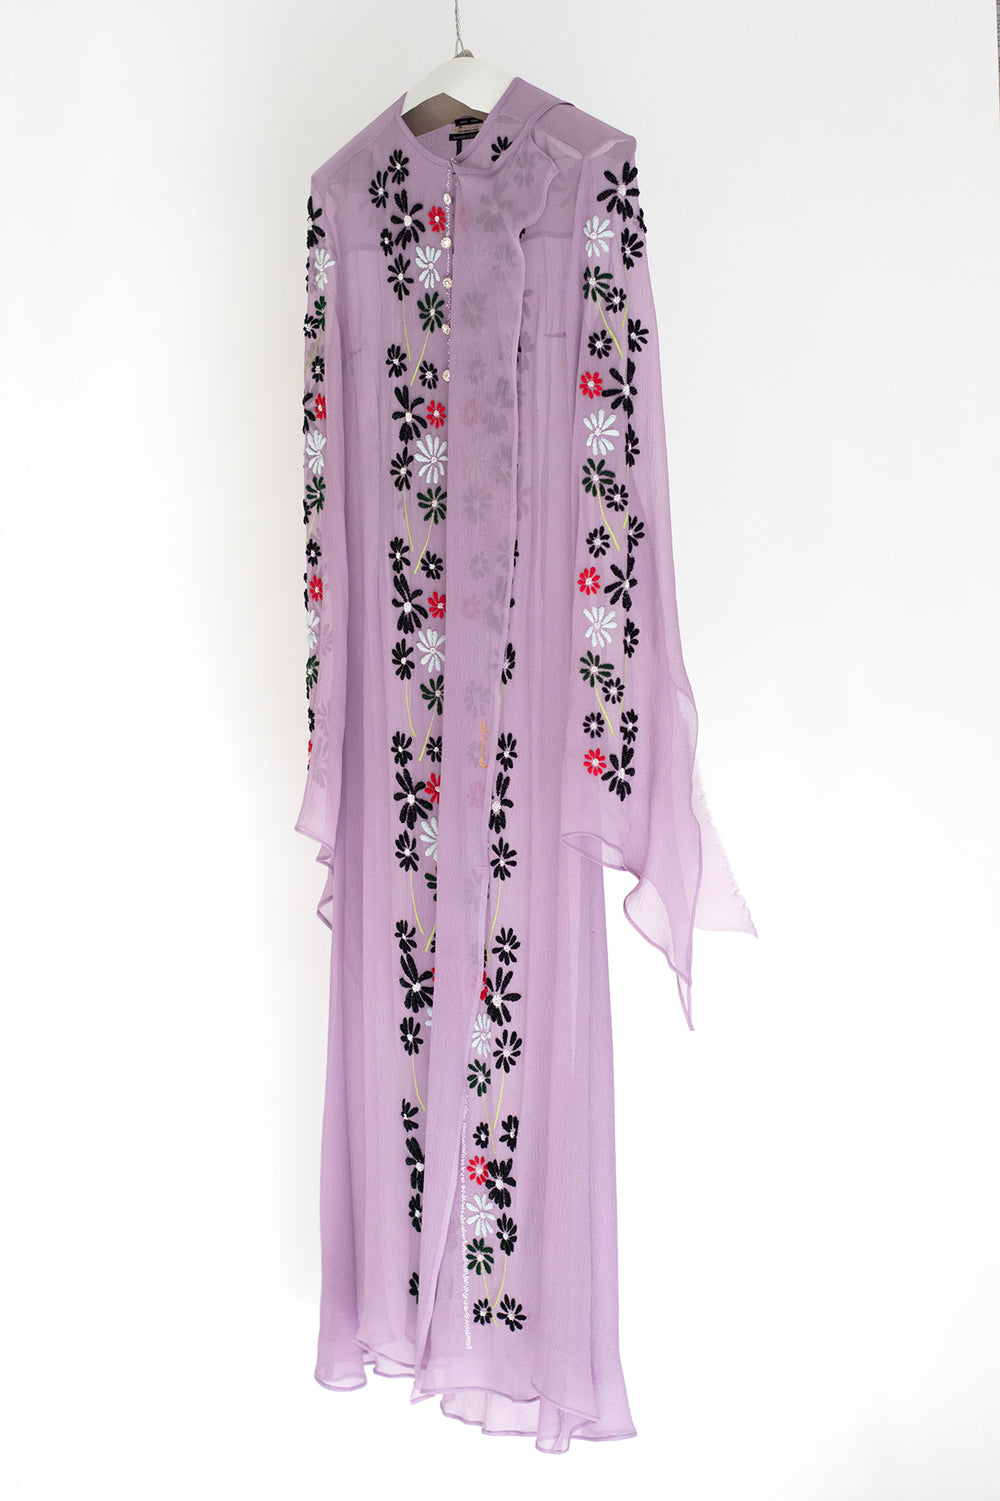 Natural dye silk chiffon flower power armor embroidered vest